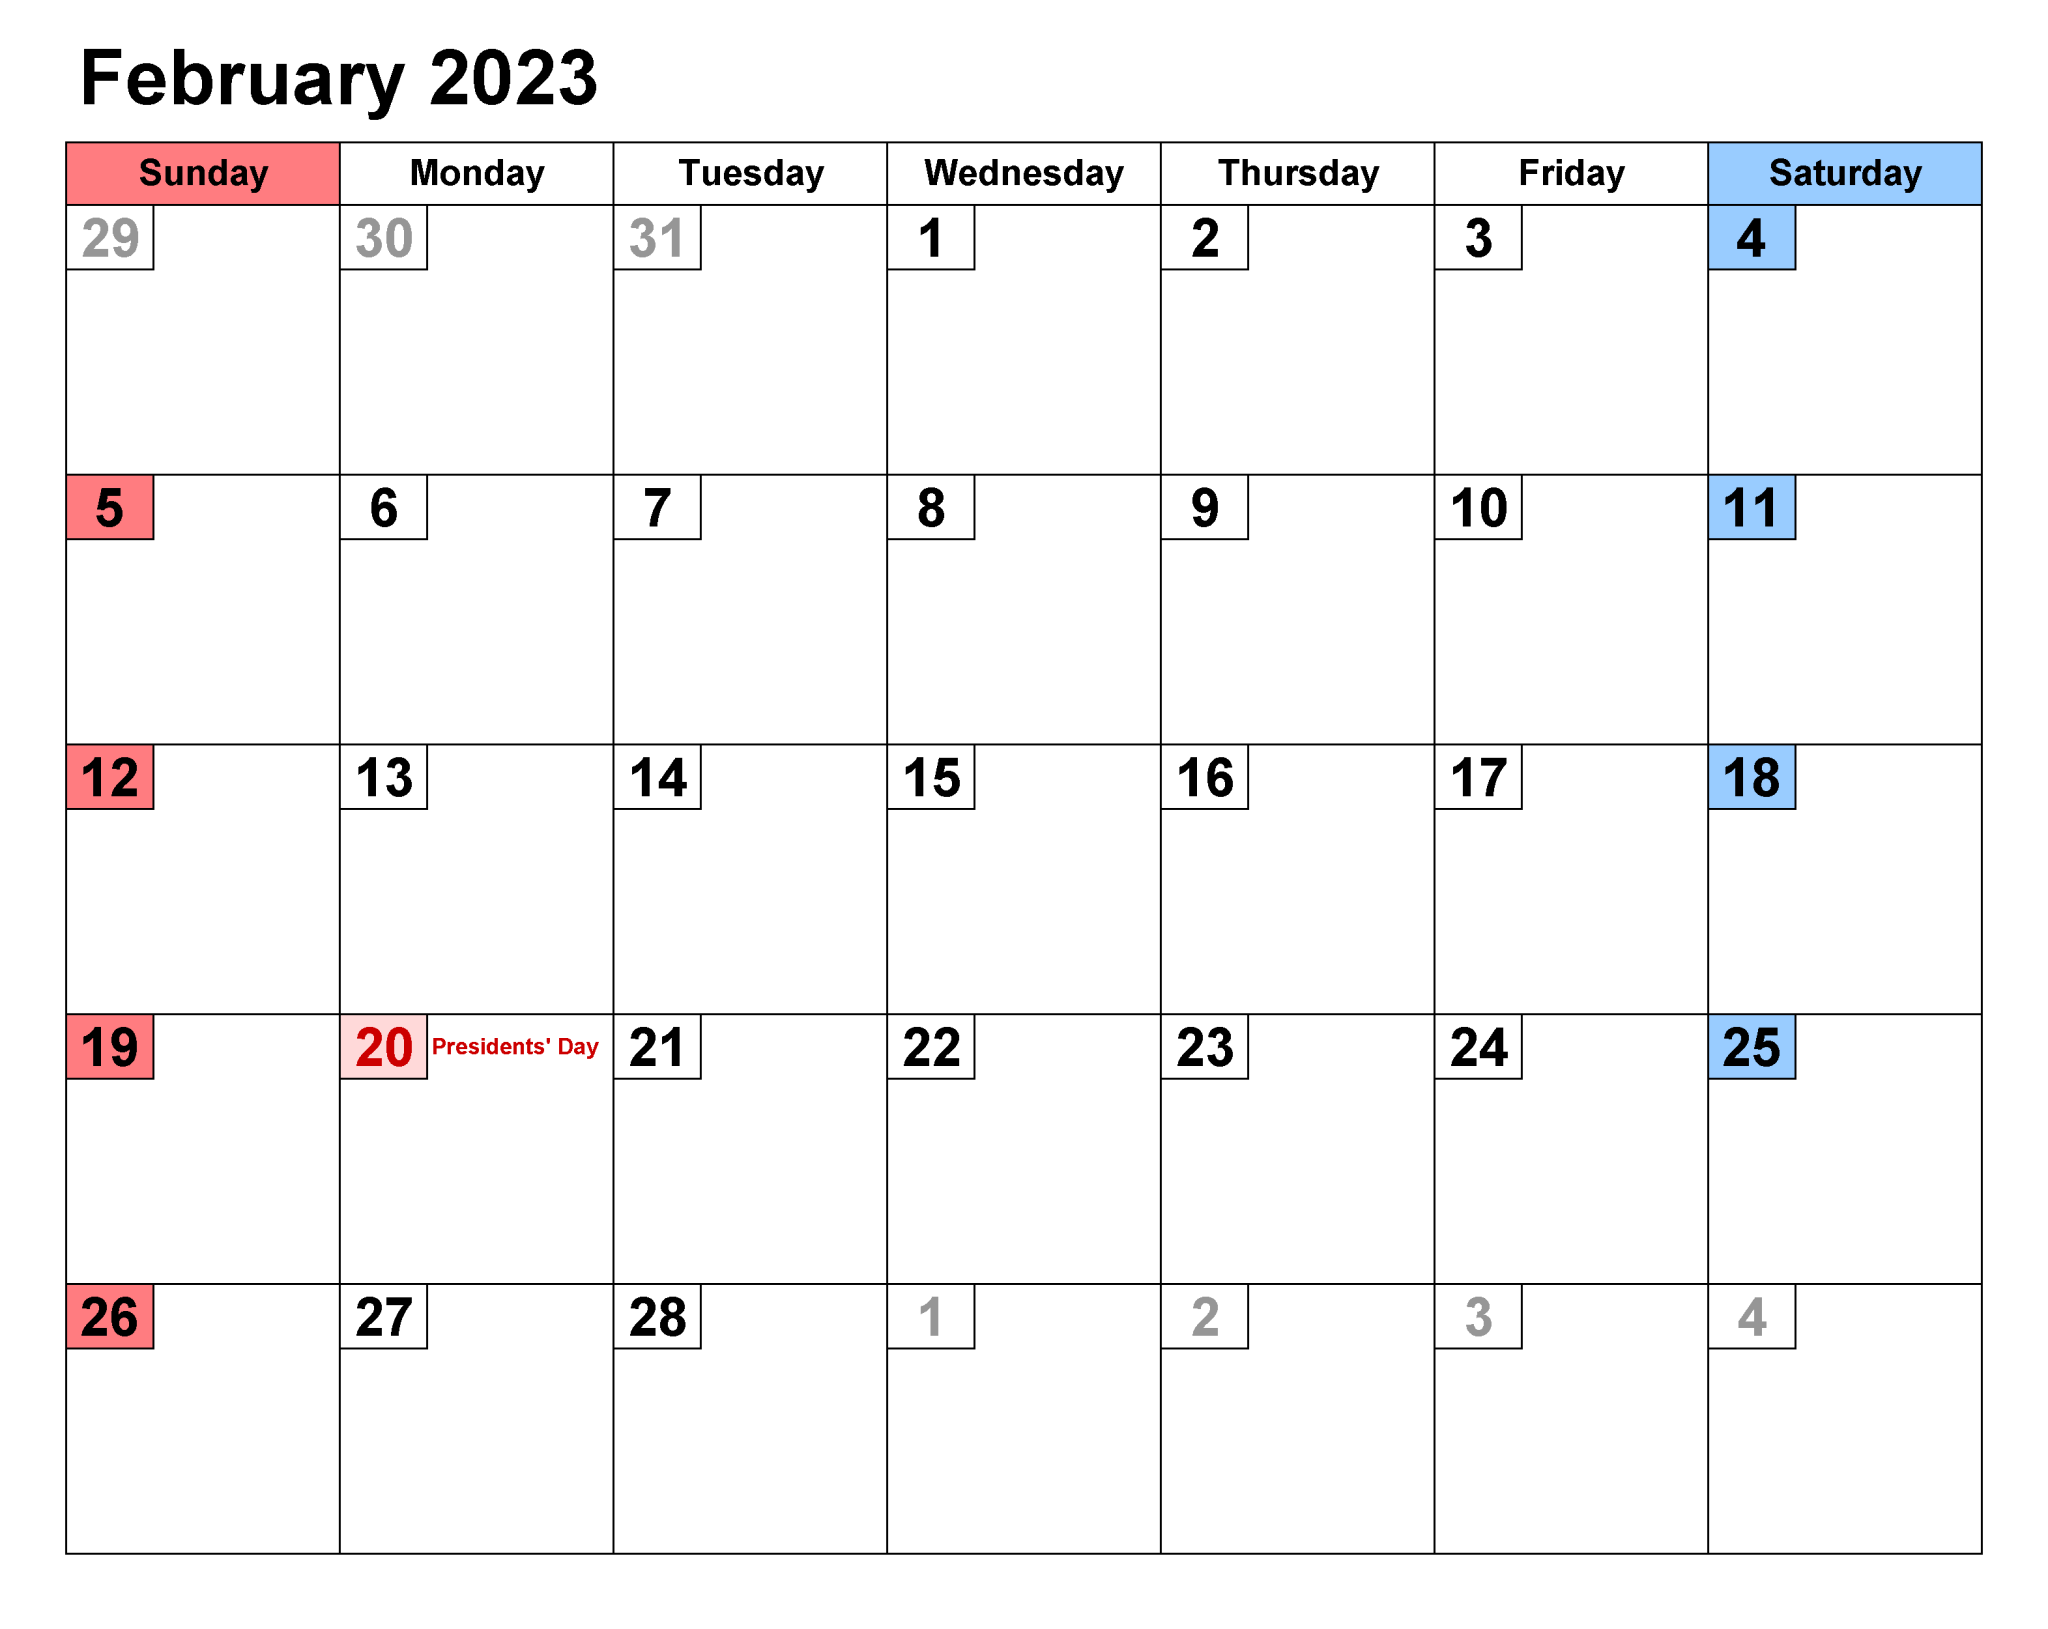 February 2023 Calendar - Celebrate President's Day